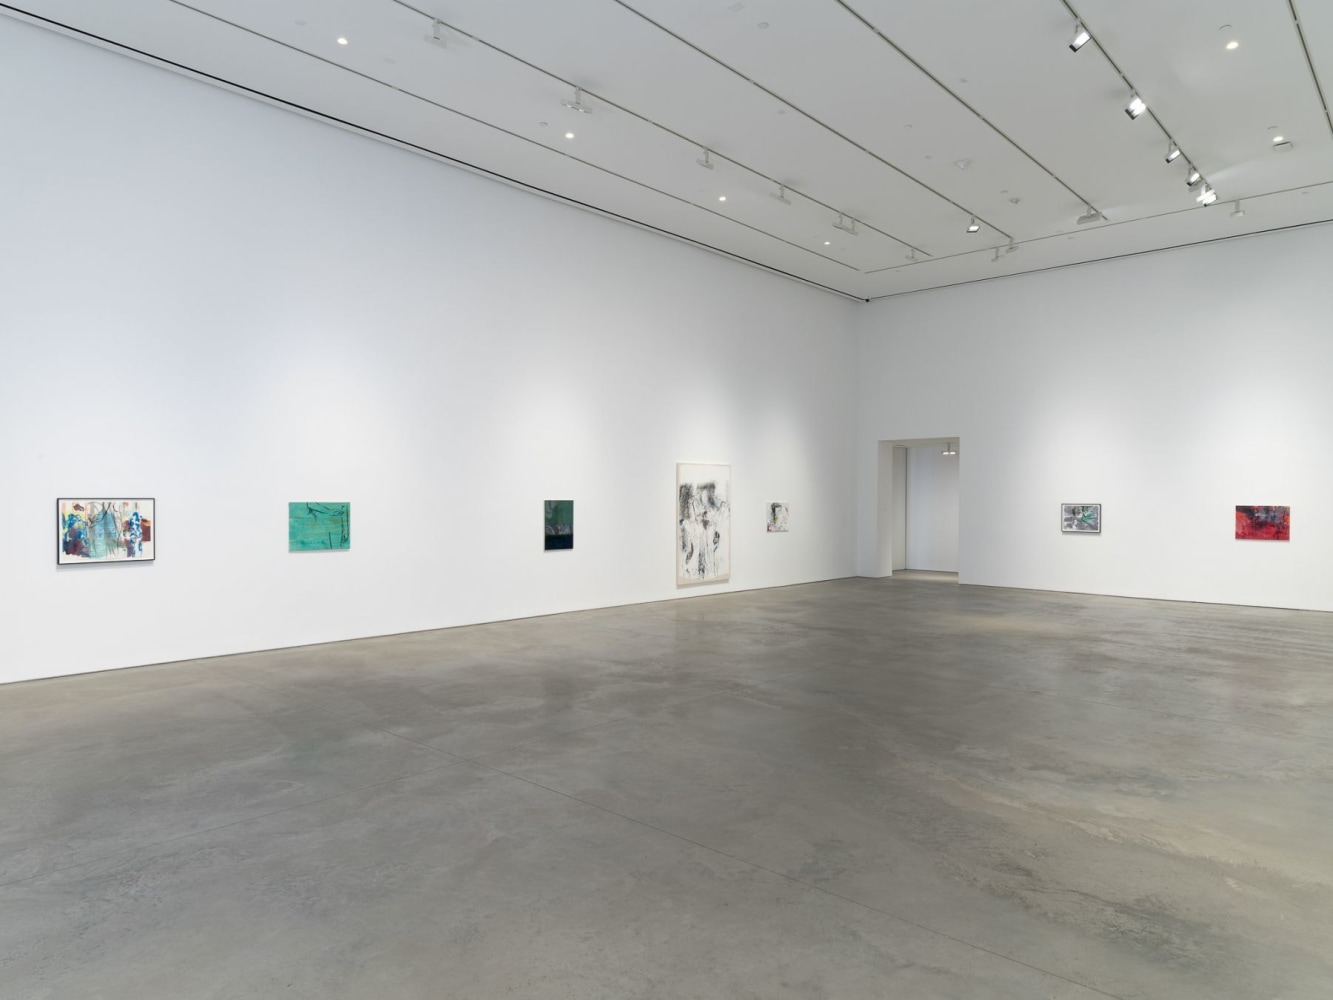 Installation view: Nick Mauss, 303 Gallery, New York, 2020. Photo: John Berens